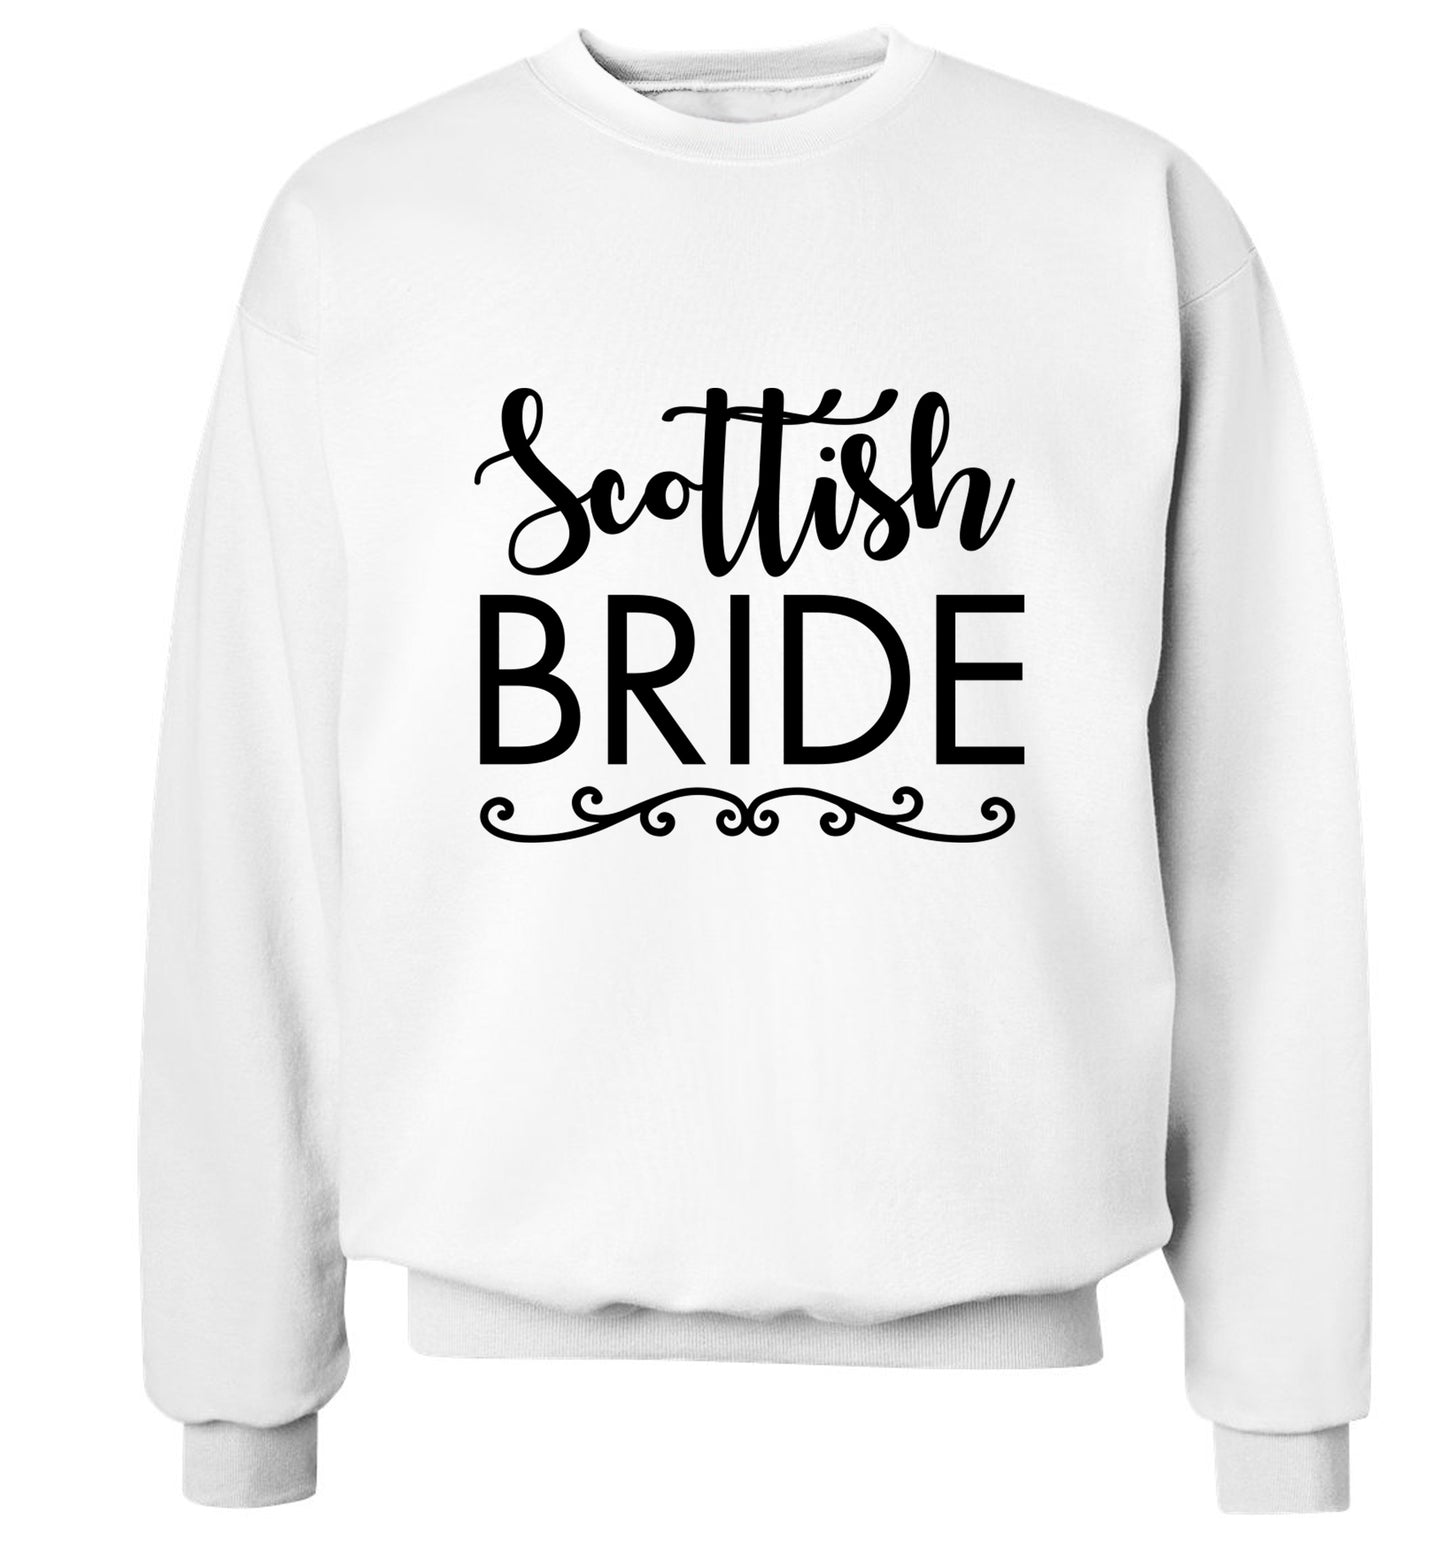 Scottish Bride Adult's unisex white Sweater 2XL